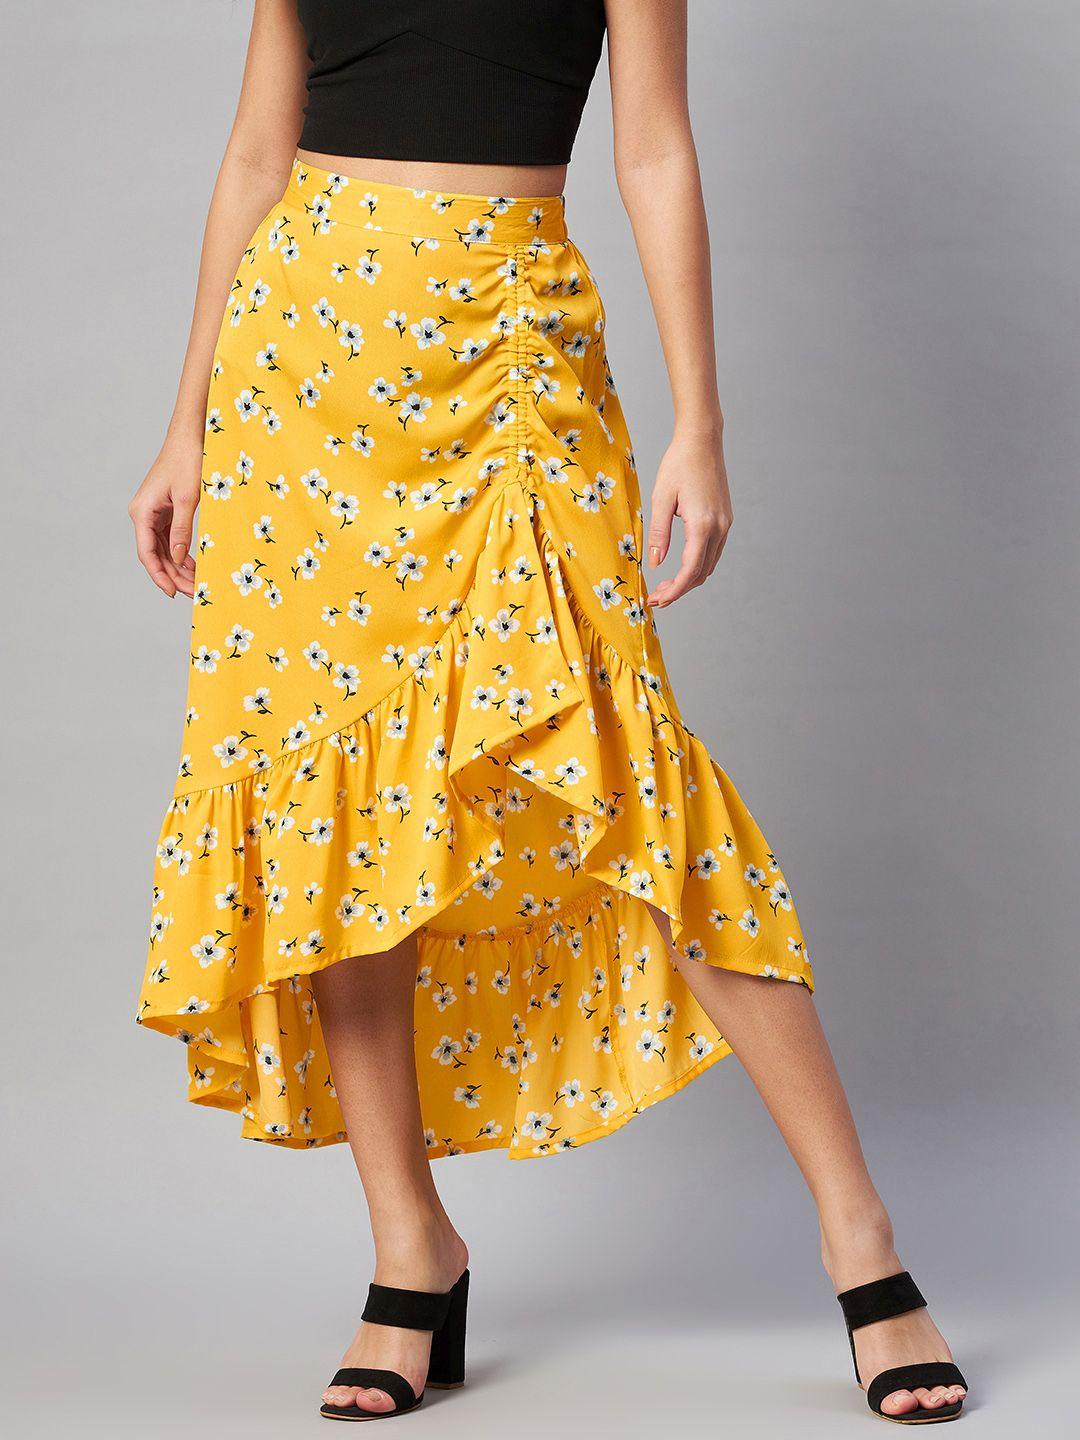 pluss yellow & white floral printed midi a-line skirt